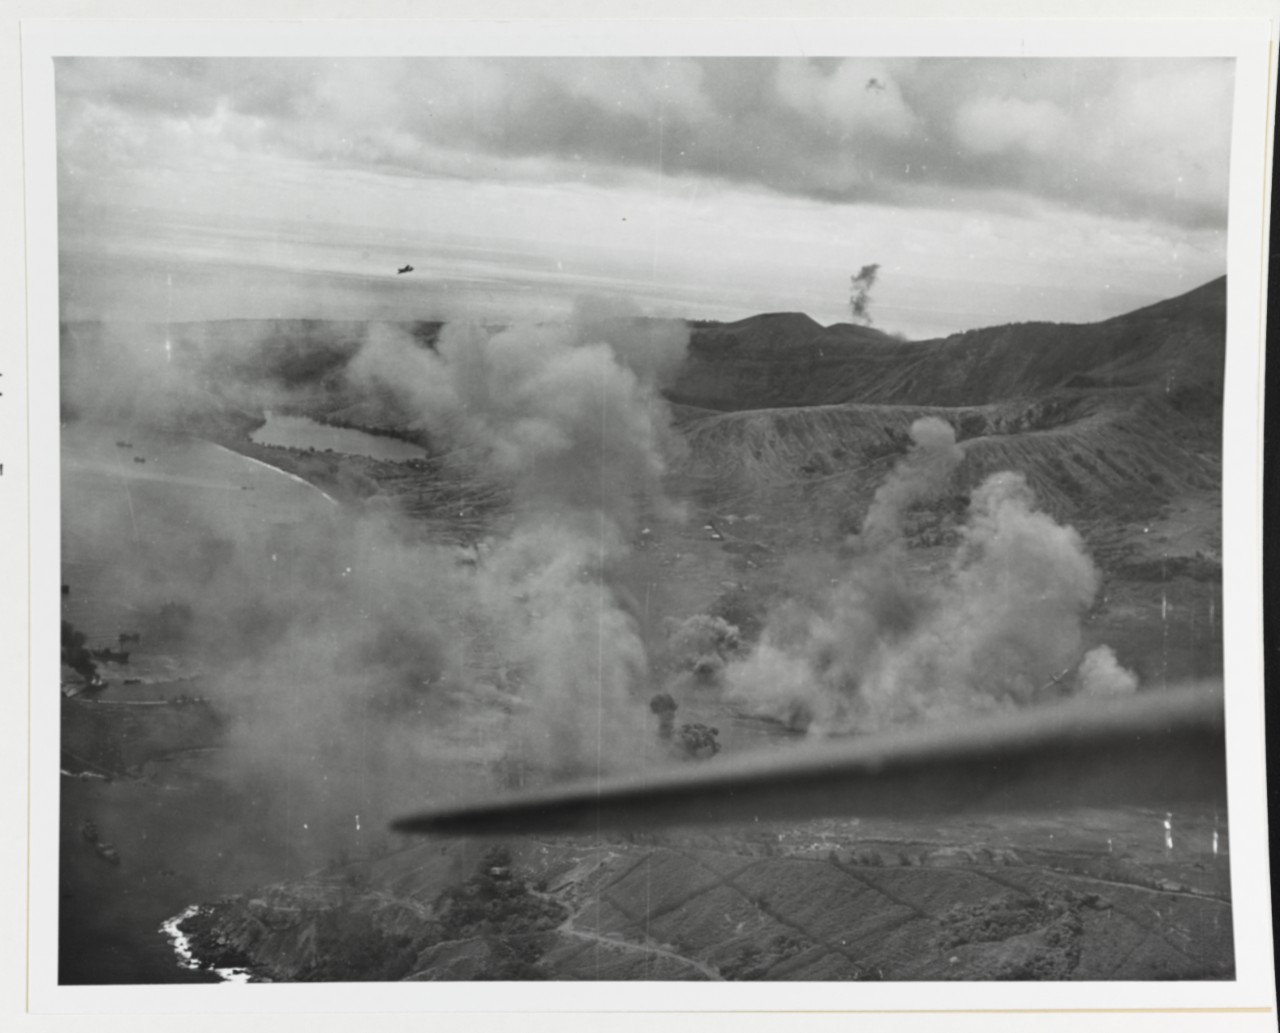 Marianas Operation, June 1944.